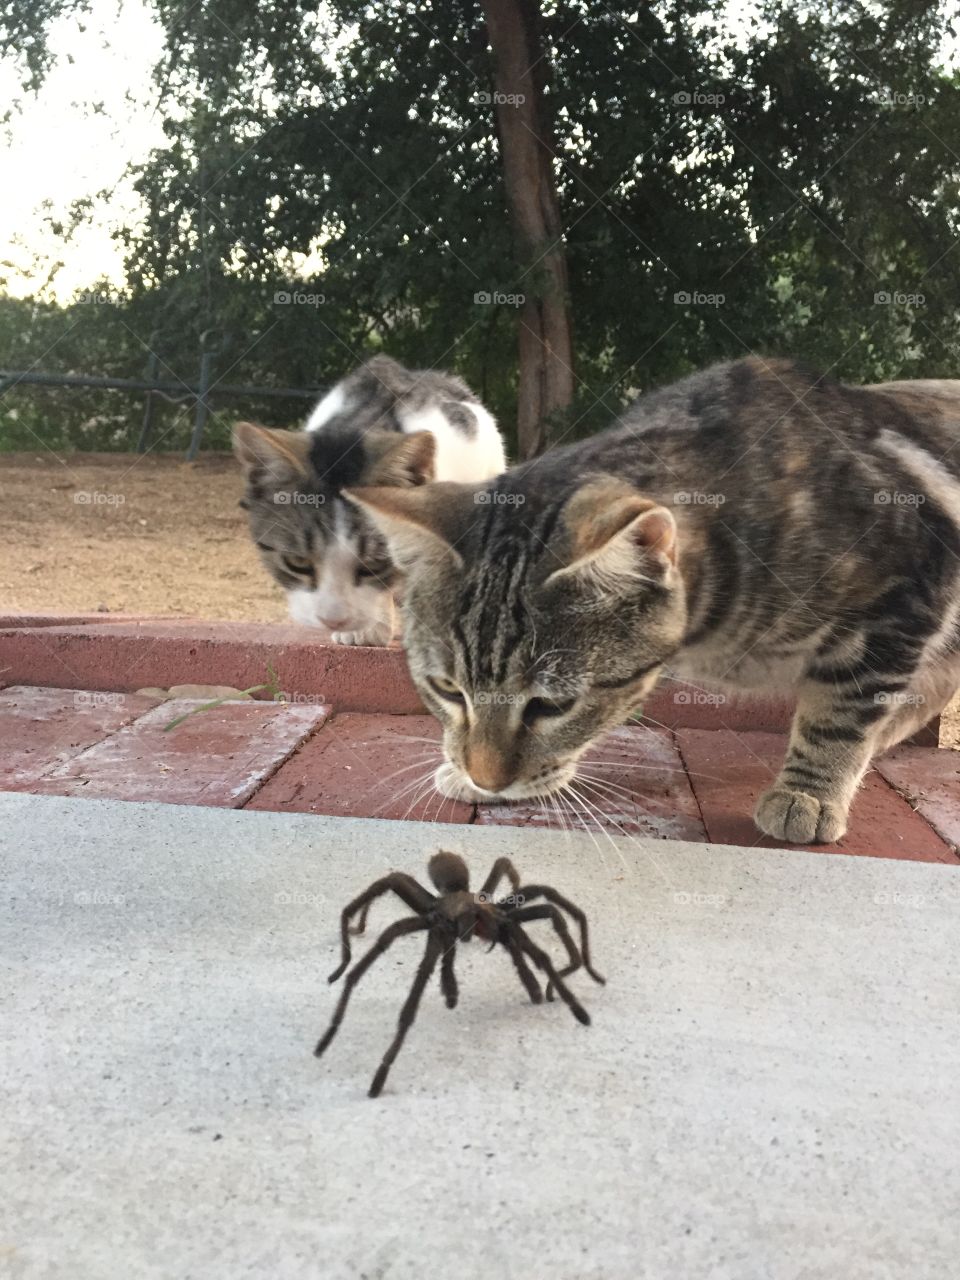 Cat and spider